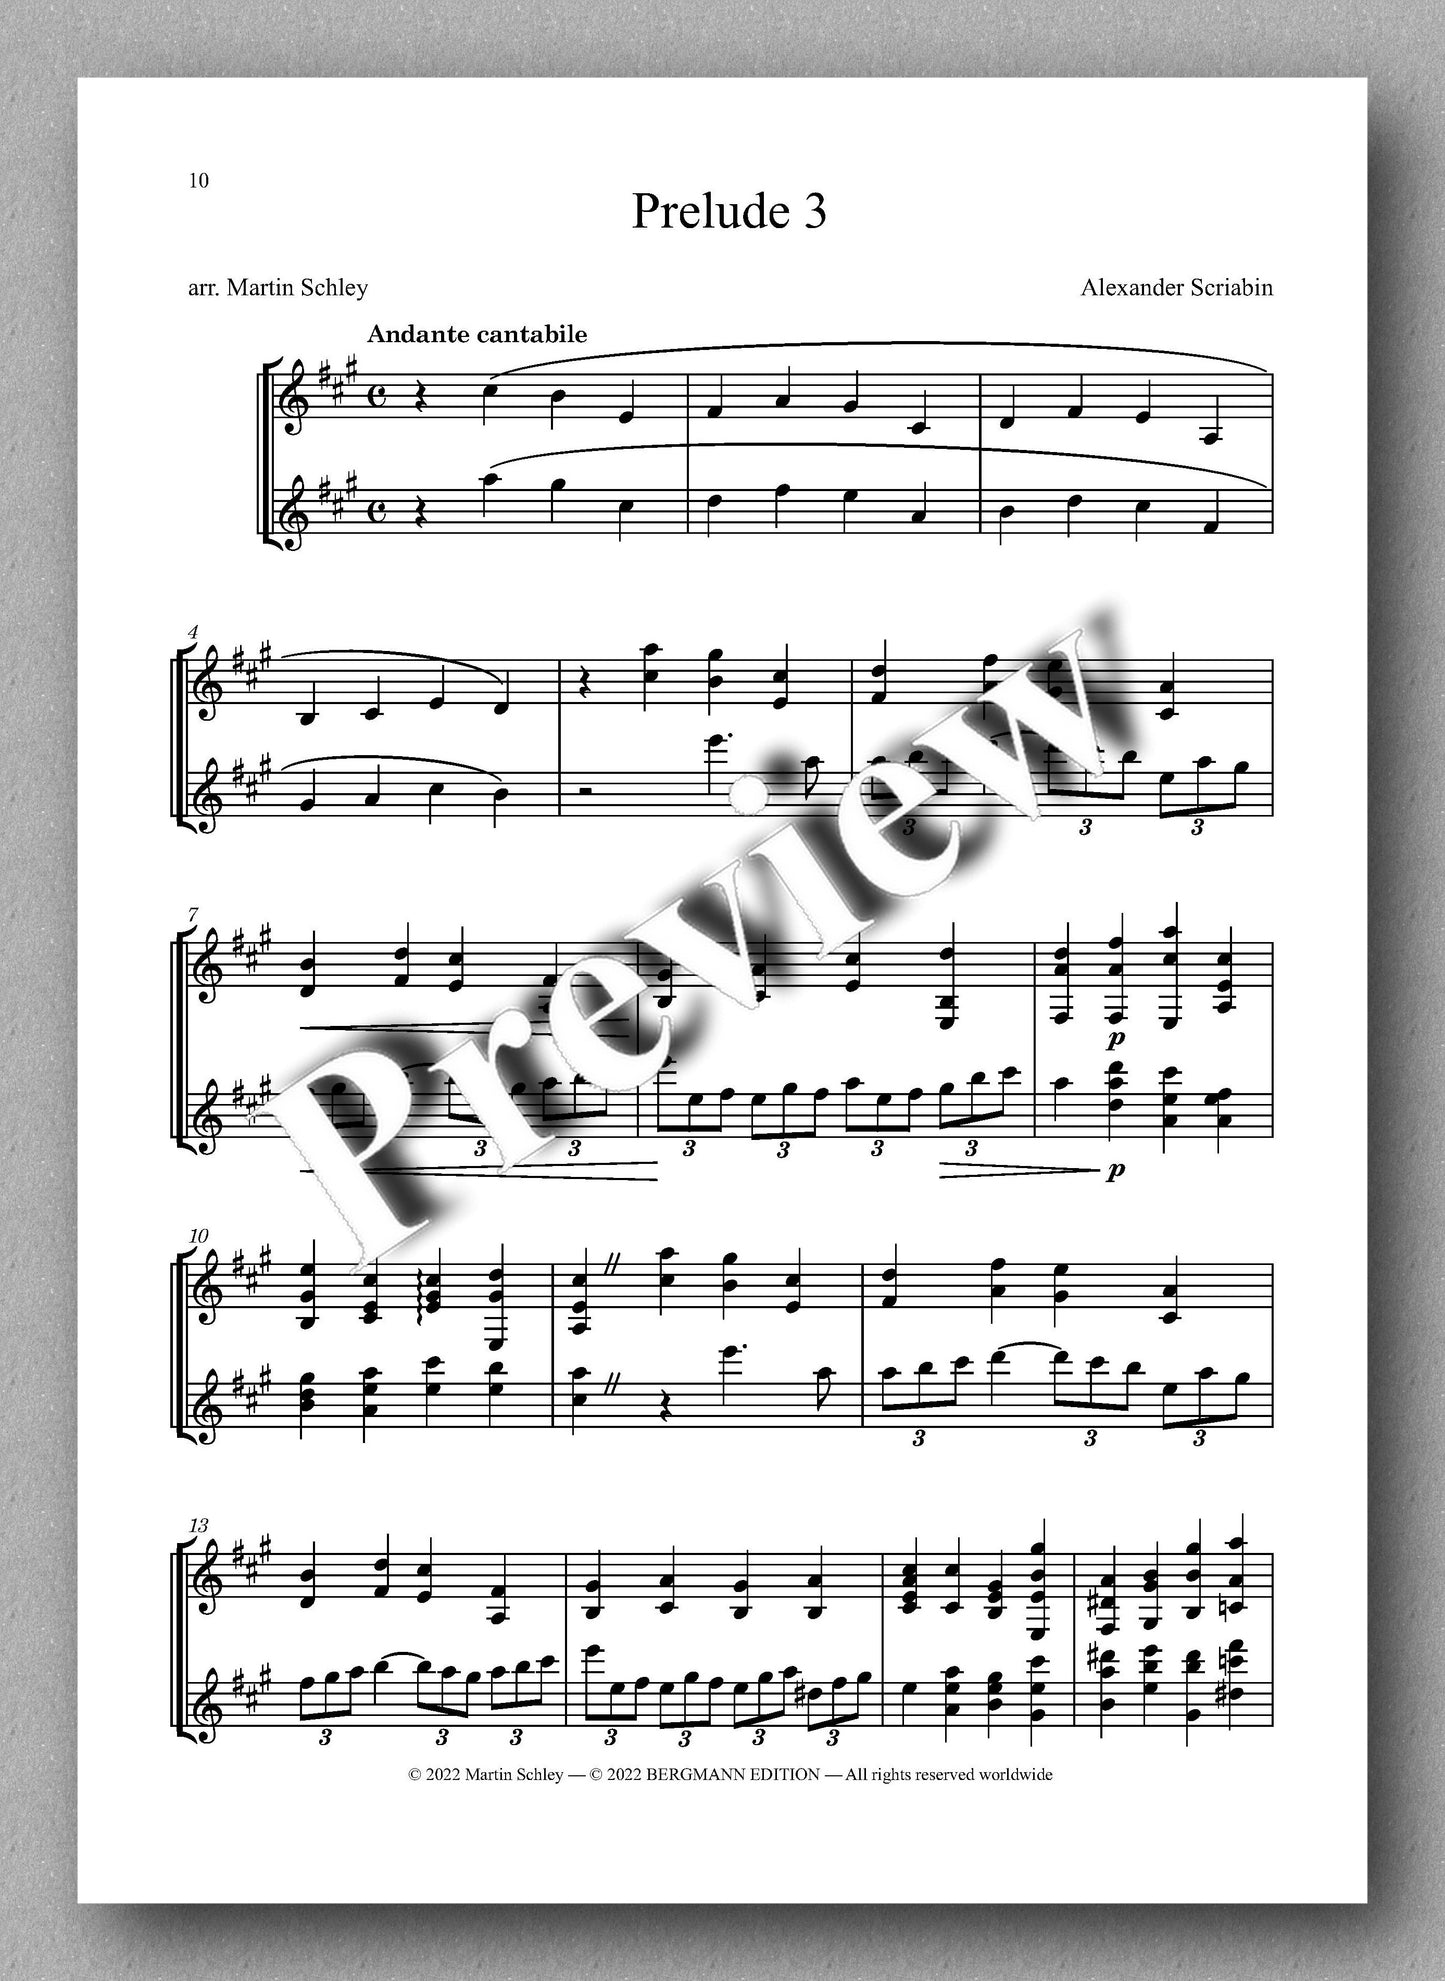 Alexander Scriabin, Five Preludes - Preview of the music score 2